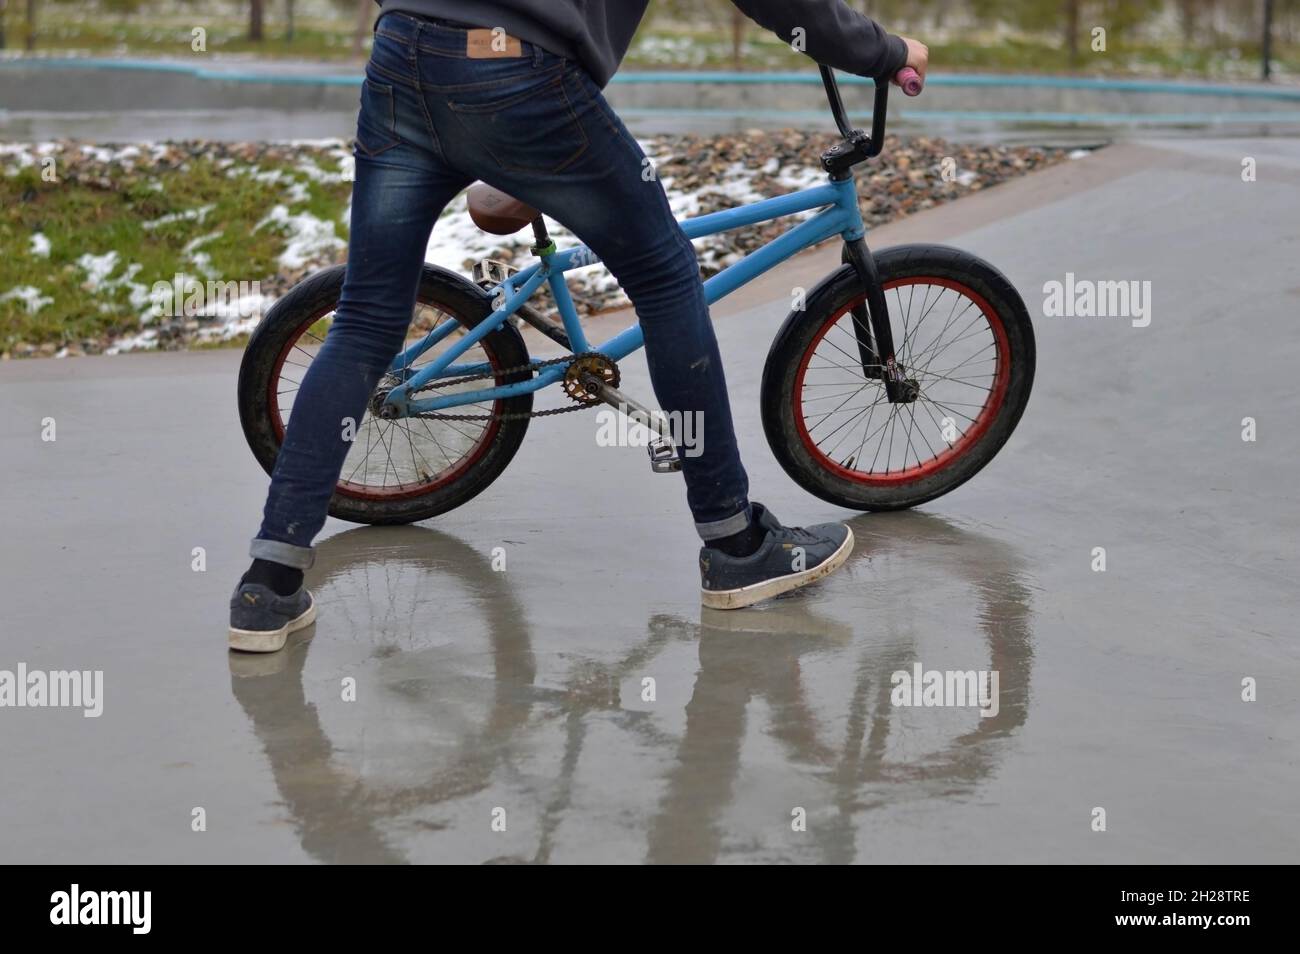 Dobrograd, Vladimir region, Russia. 5 November 2017. Teen on BMX bike failed performs a trick in the skatepark in the rainy day Stock Photo